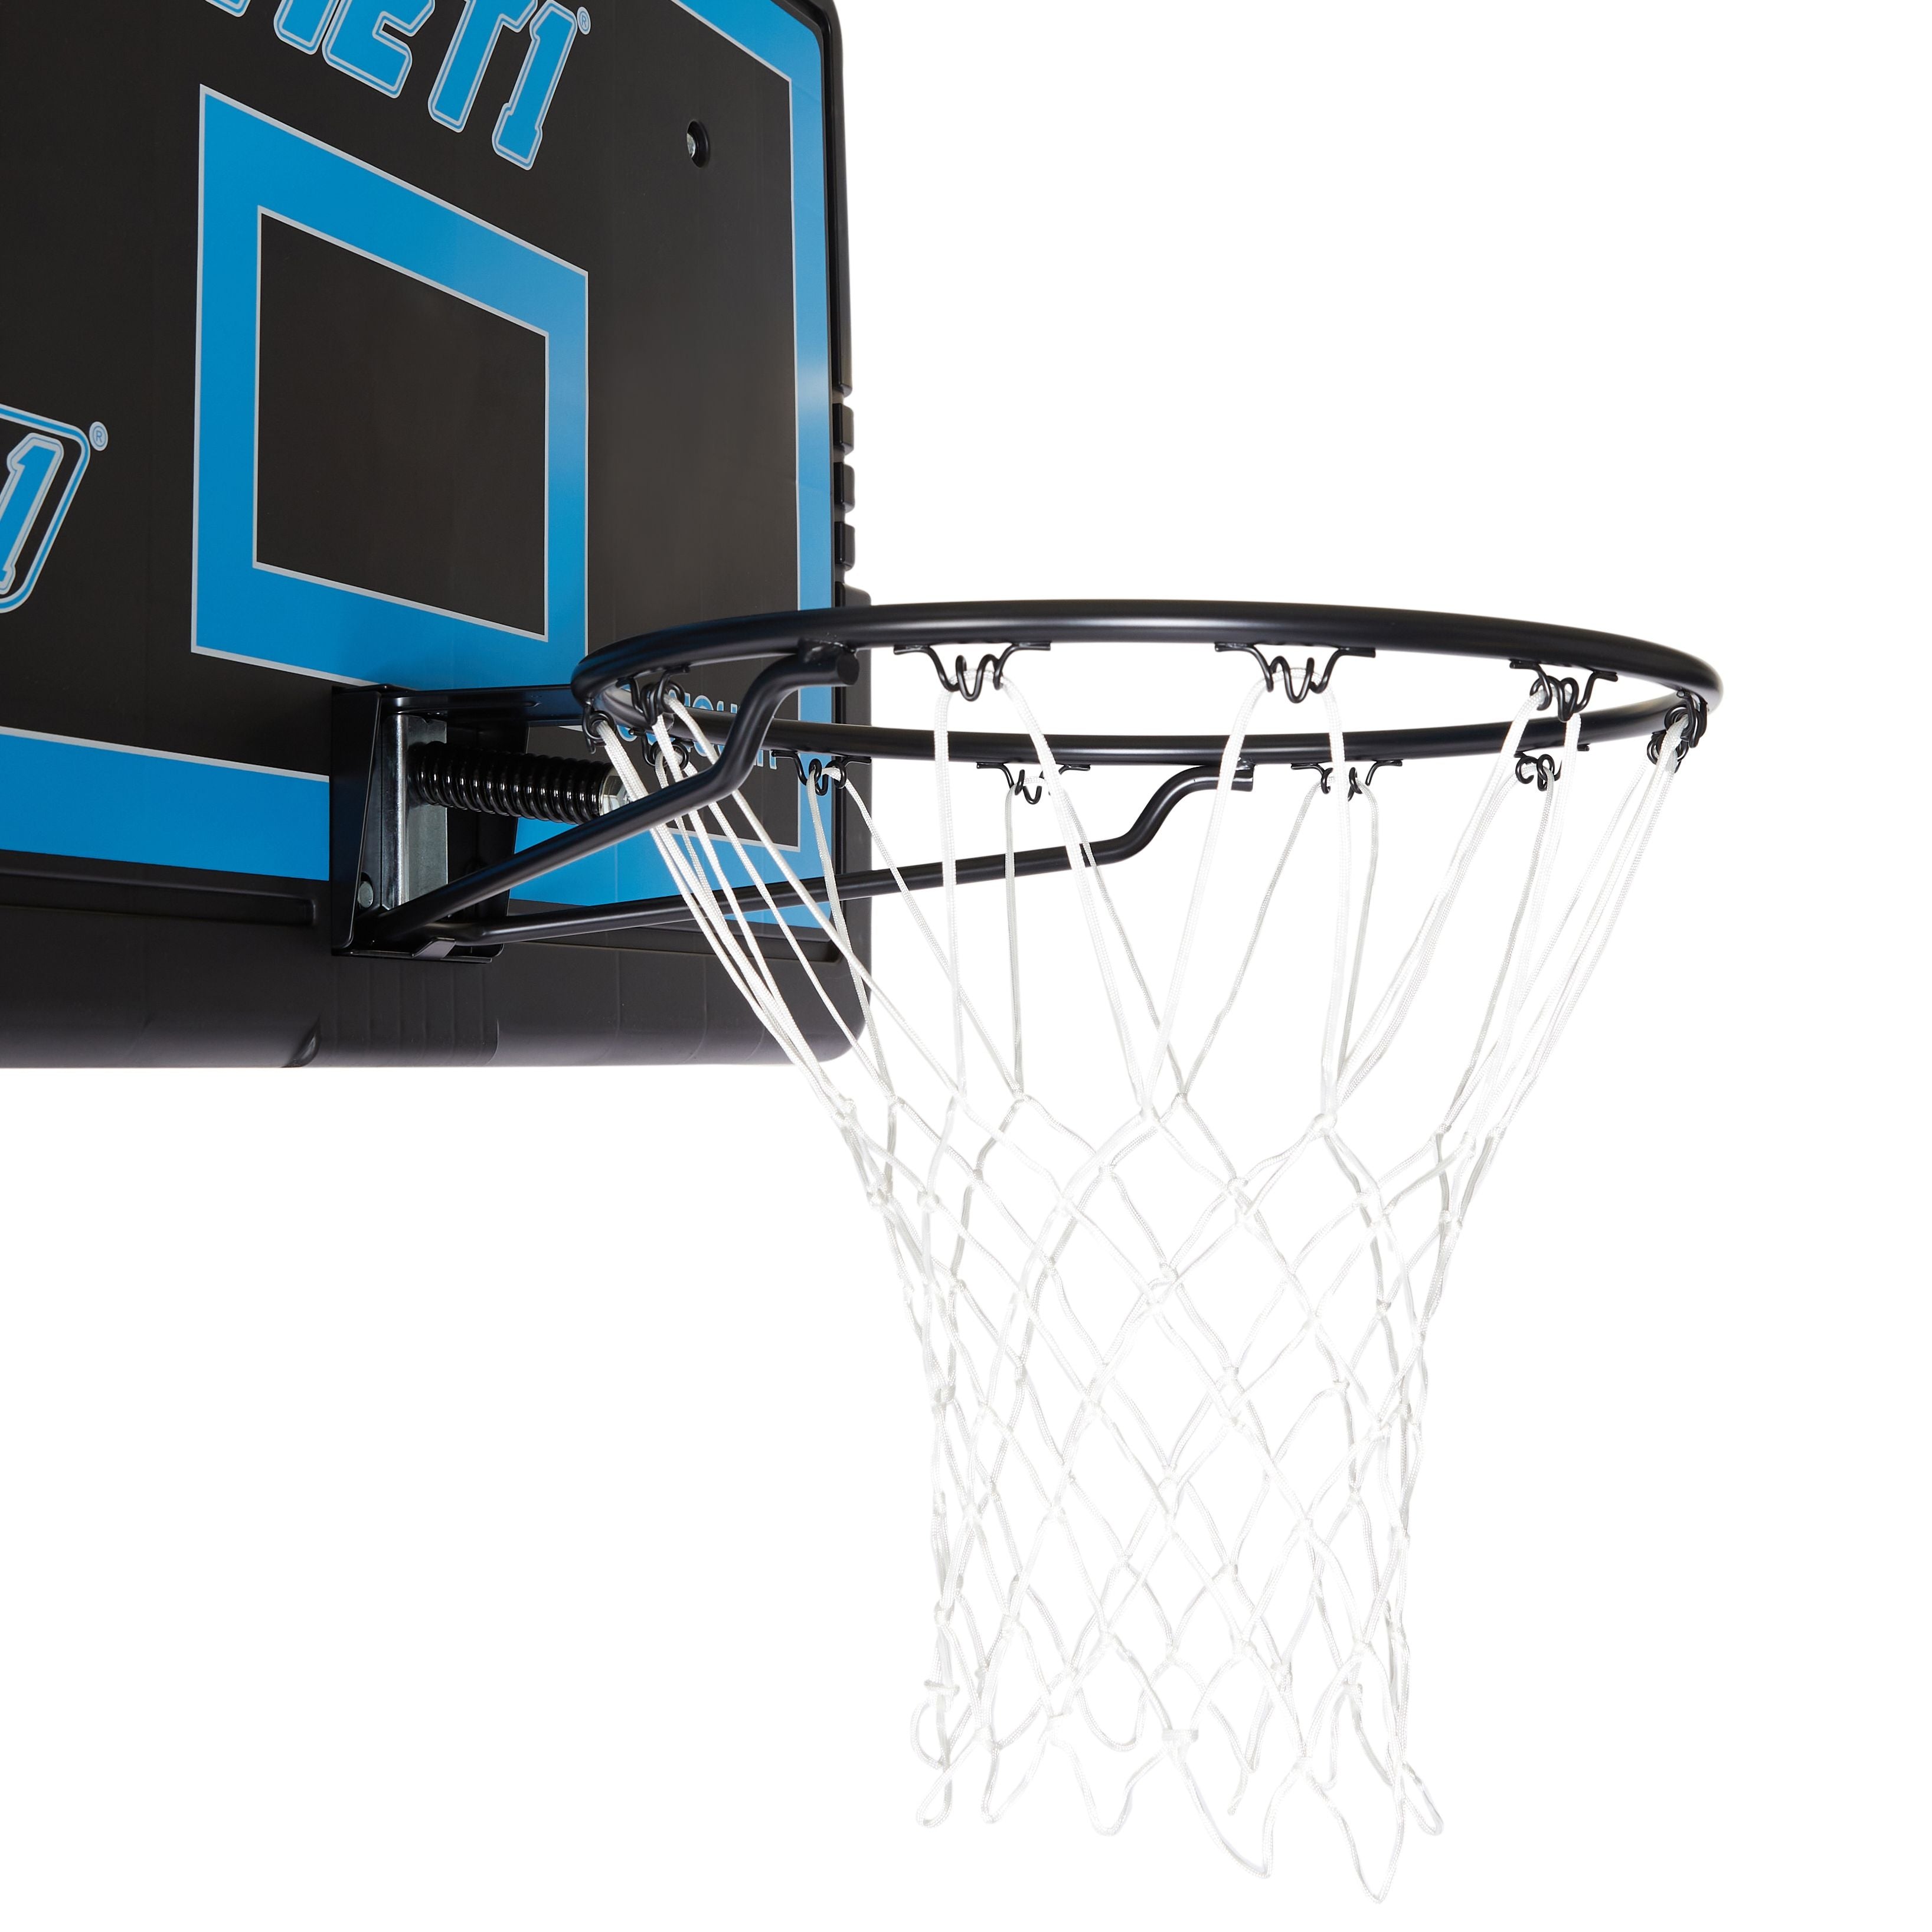 Neti Conquer Basketball Hoop